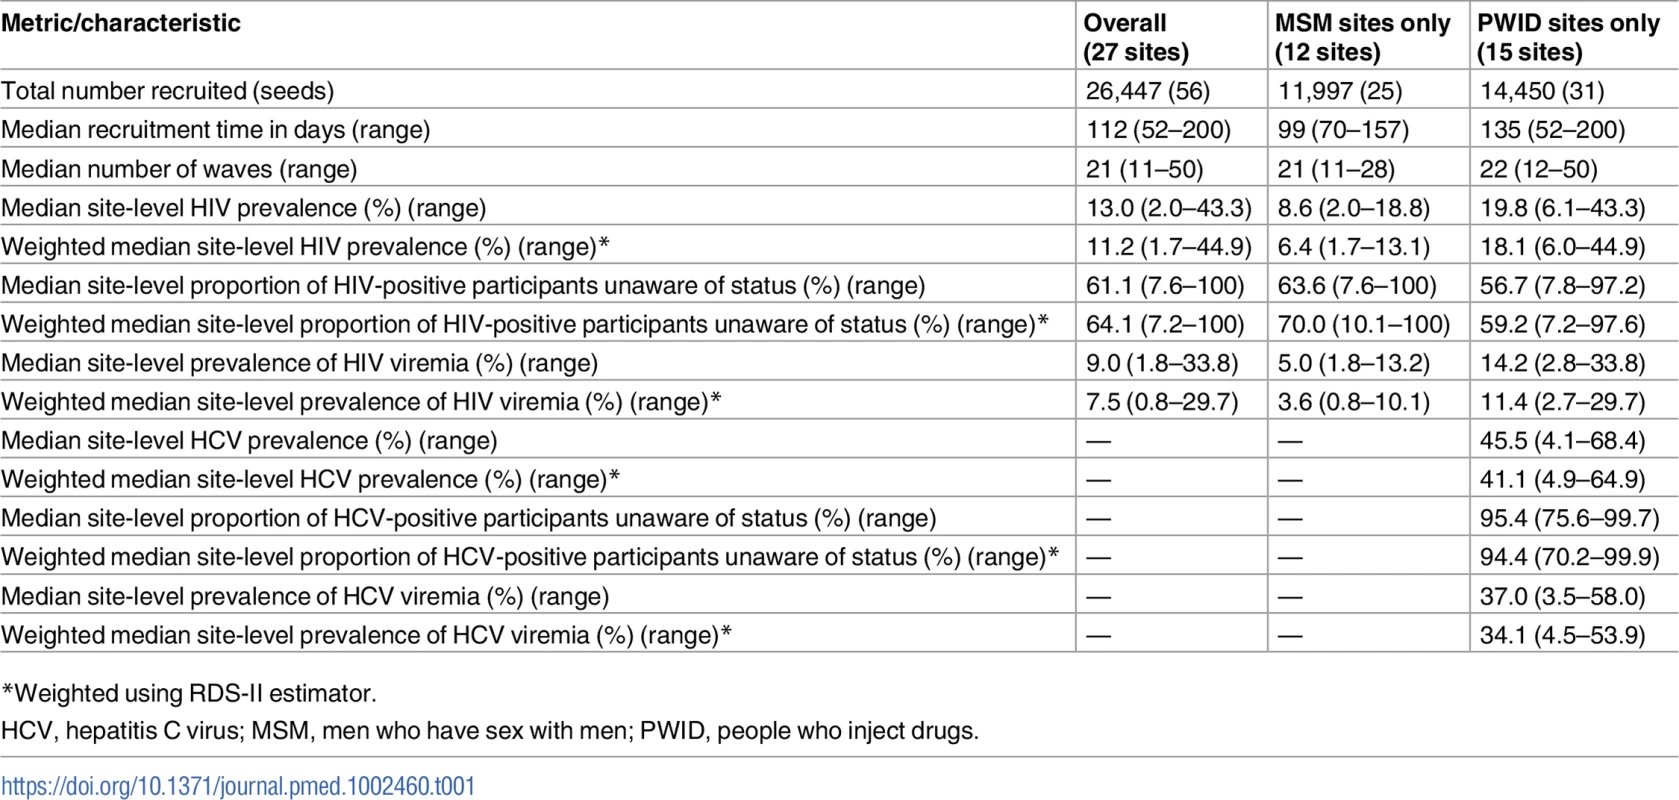 Summary respondent-driven sampling recruitment metrics and HIV/HCV characteristics.